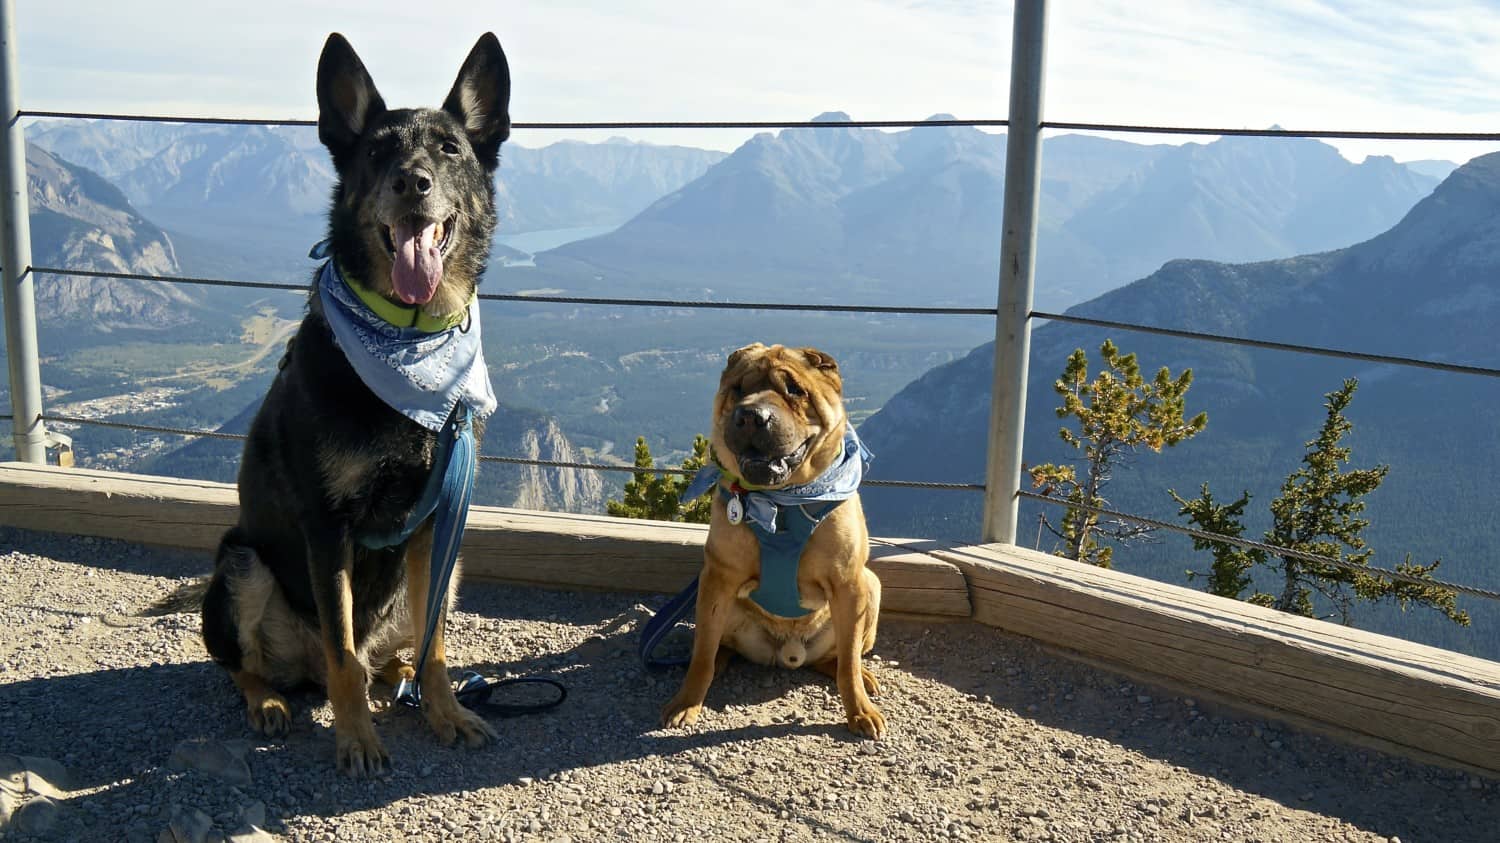 Visiting Dog Friendly Banff, AB | GoPetFriendly.com